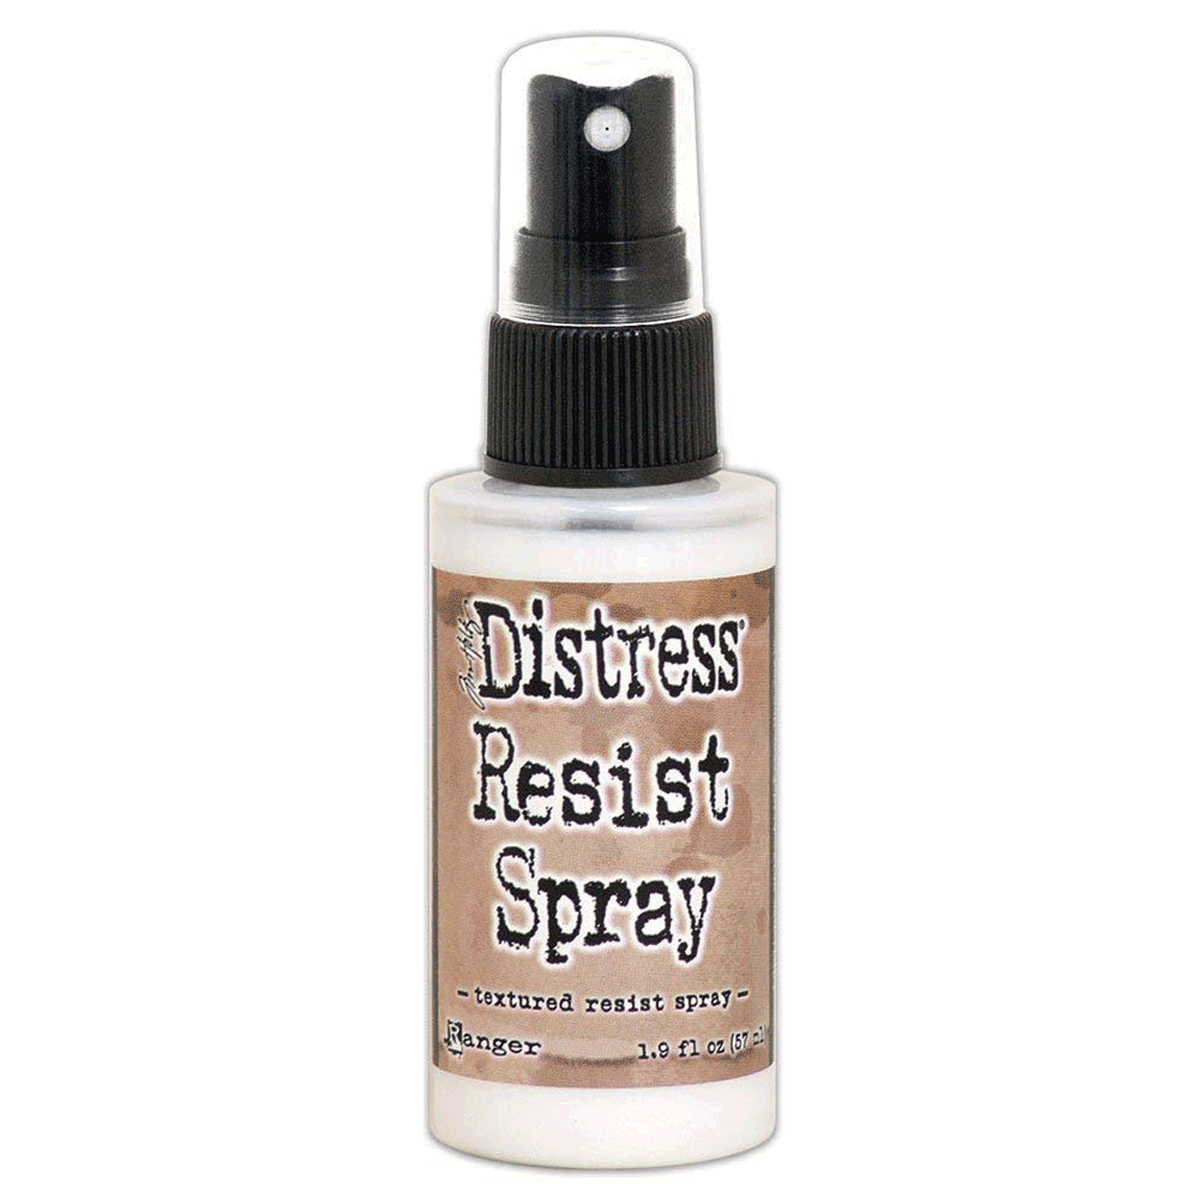 Tim Holtz Distress Resist Spray 1.9 oz